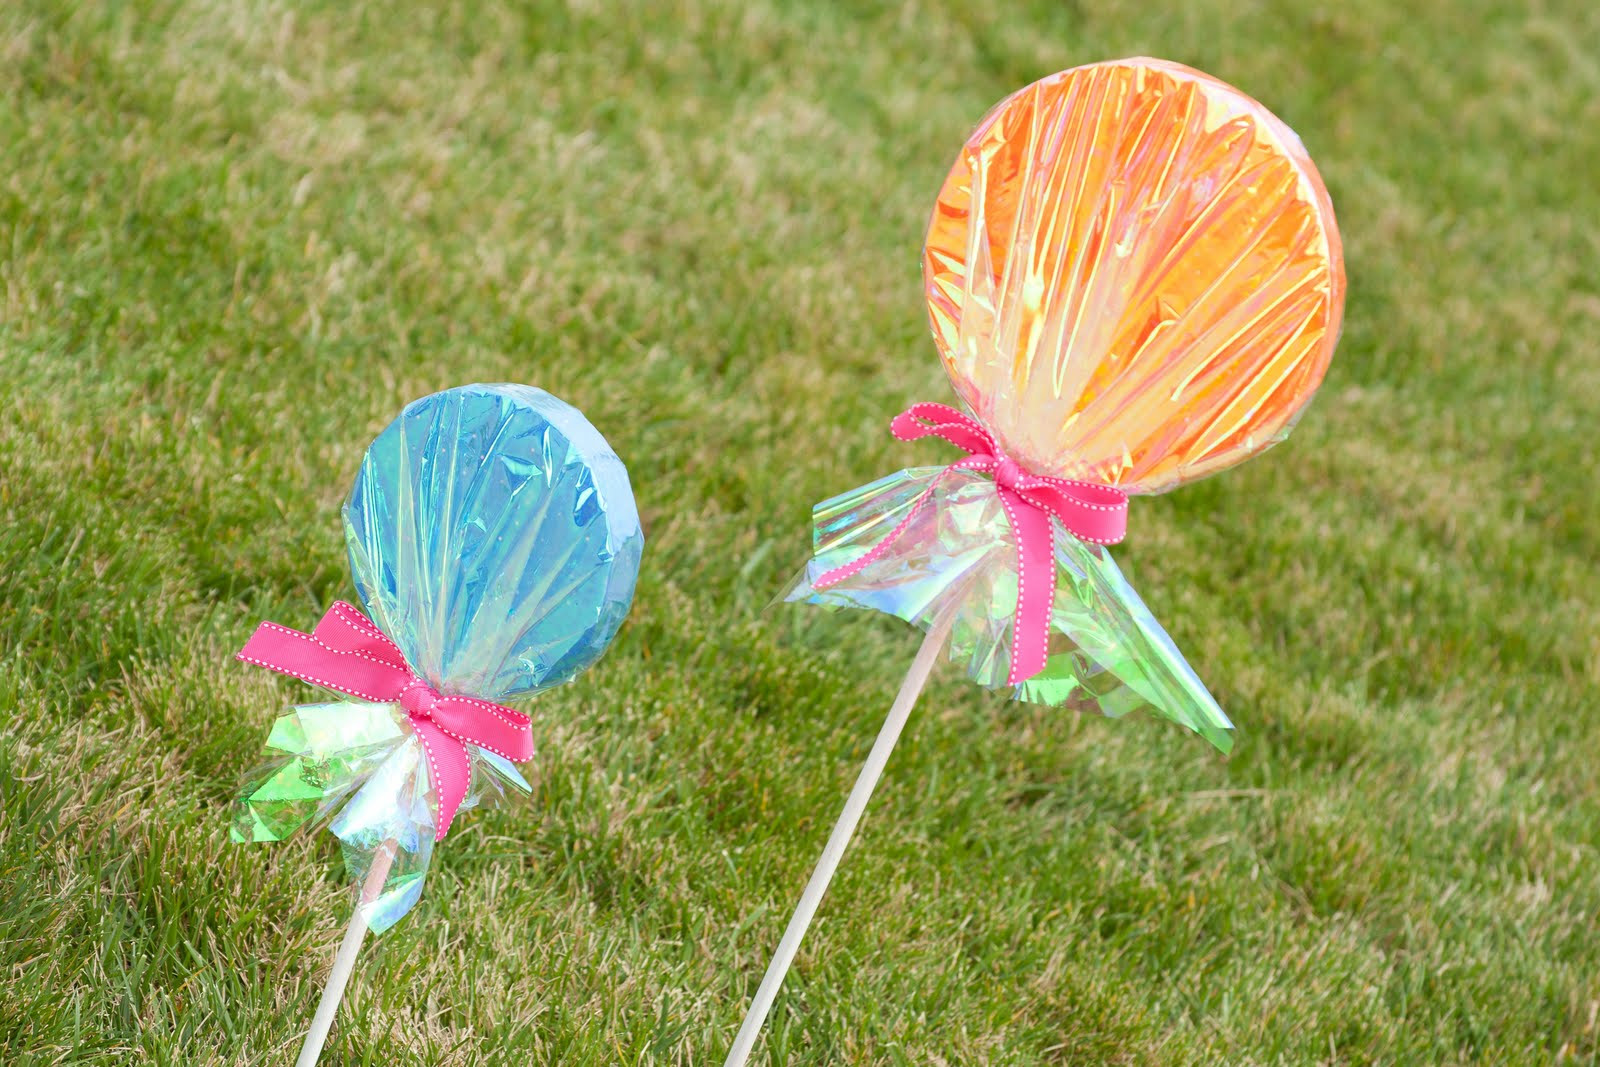 DIY Lollipop Decorations
 How to Make Giant Lollipop Decorations – Glorious Treats